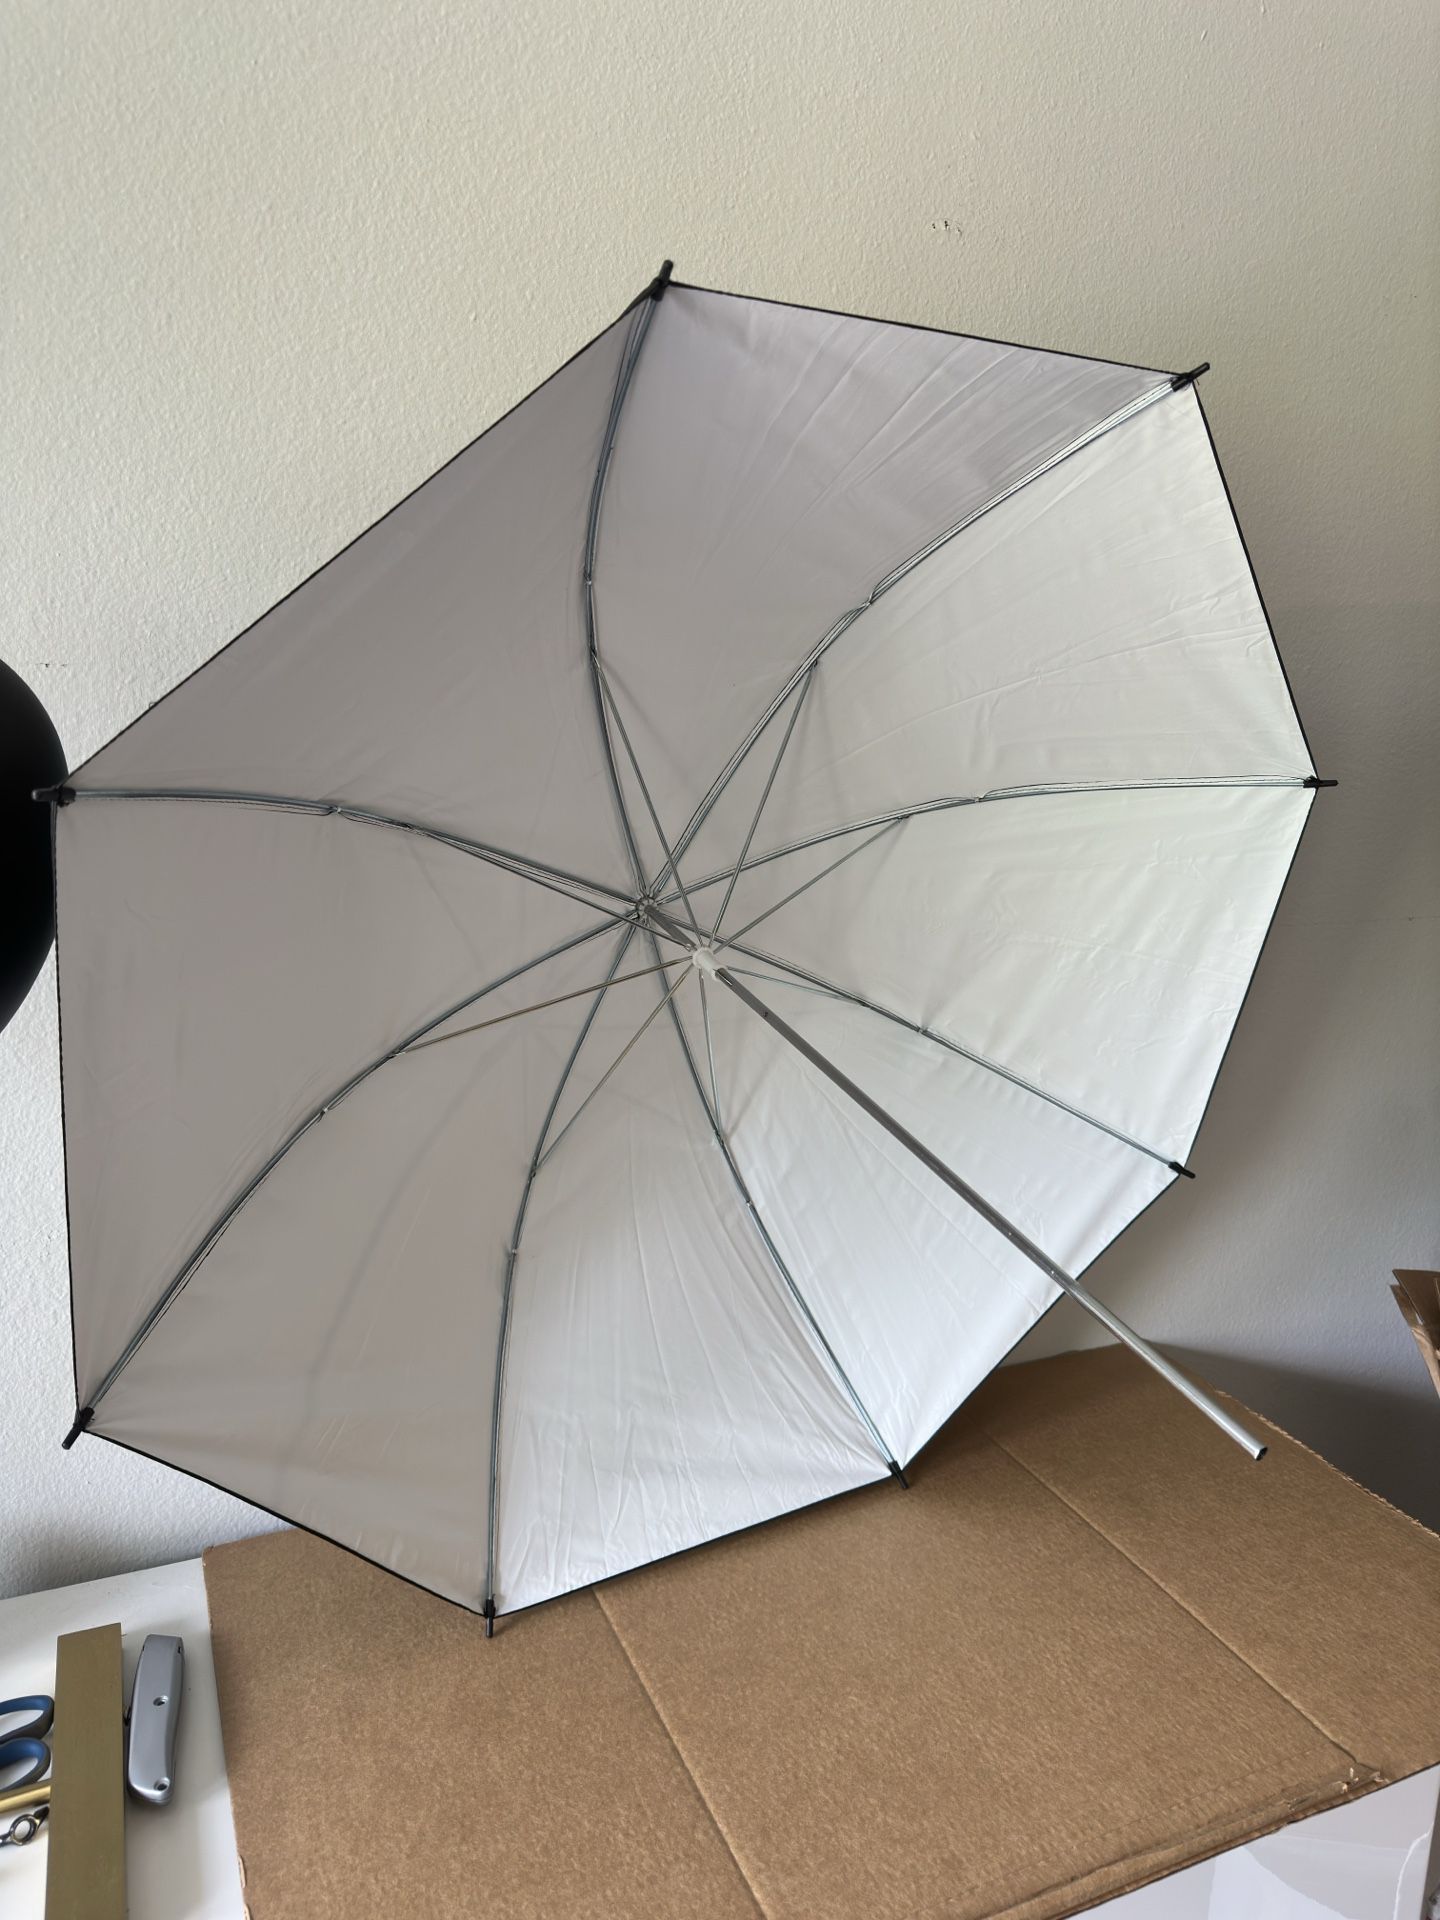 Two Studio Umbrellas Savage 36” 